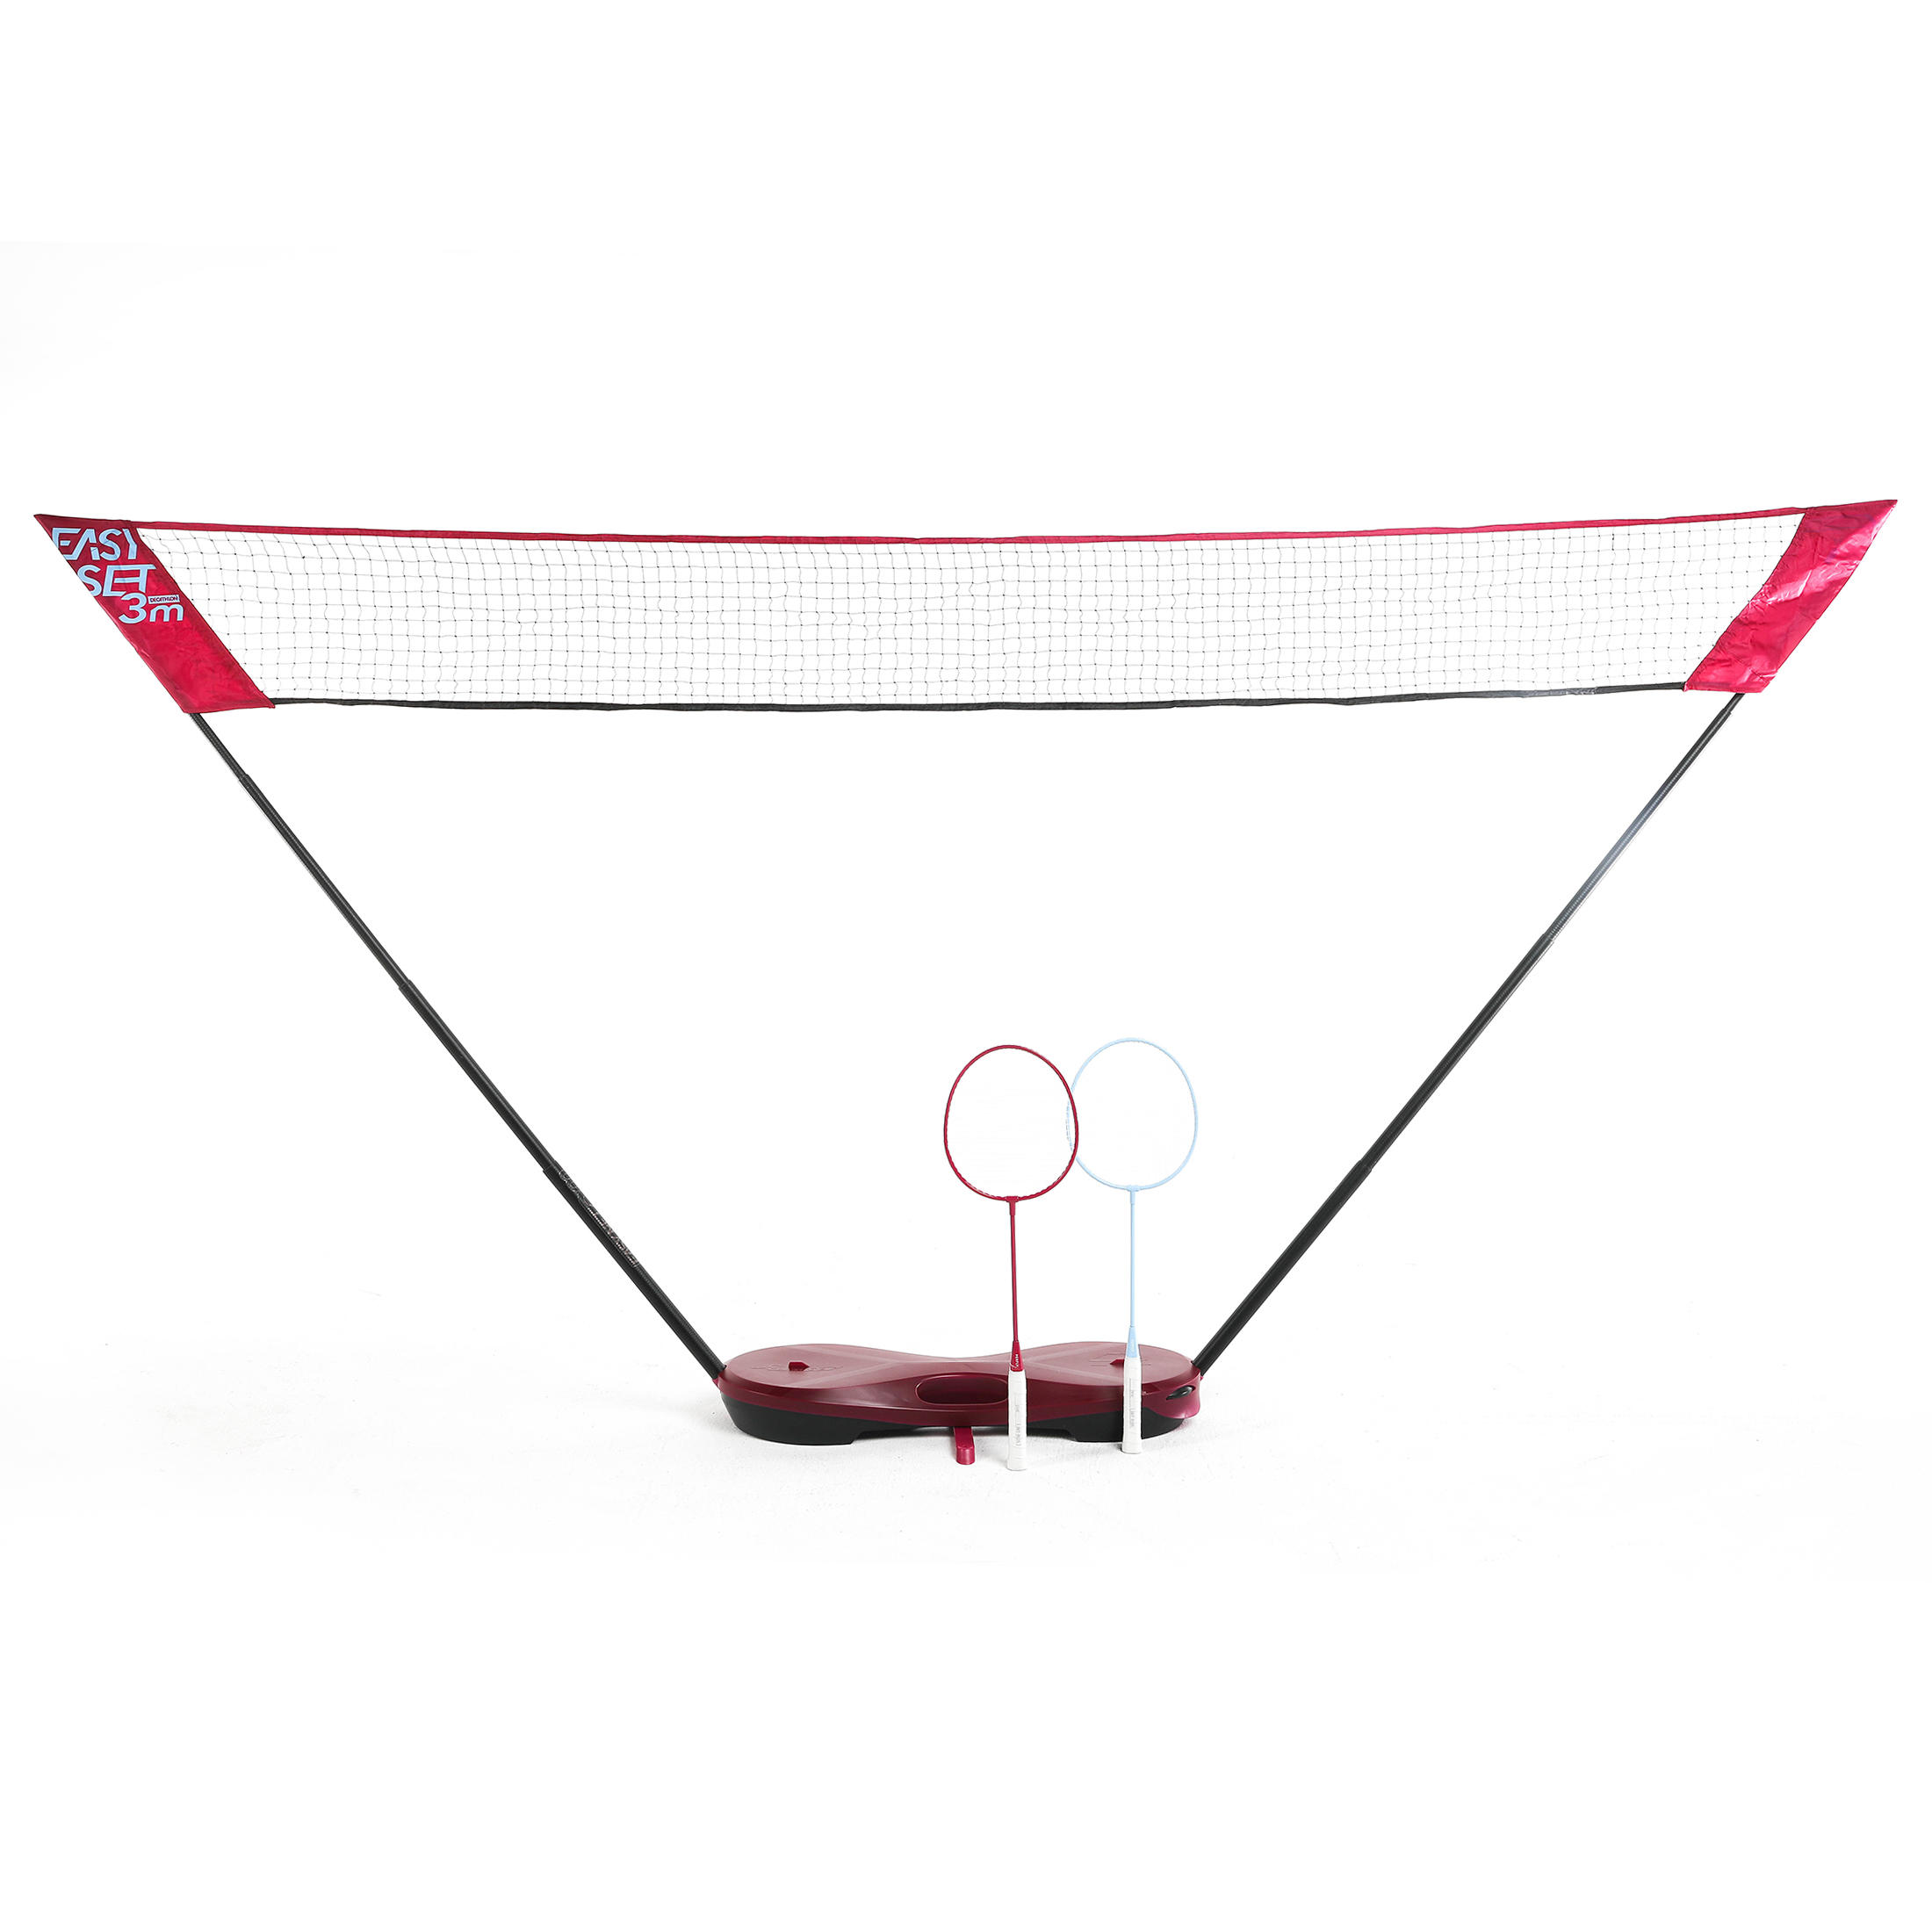 Badminton Club Equipment